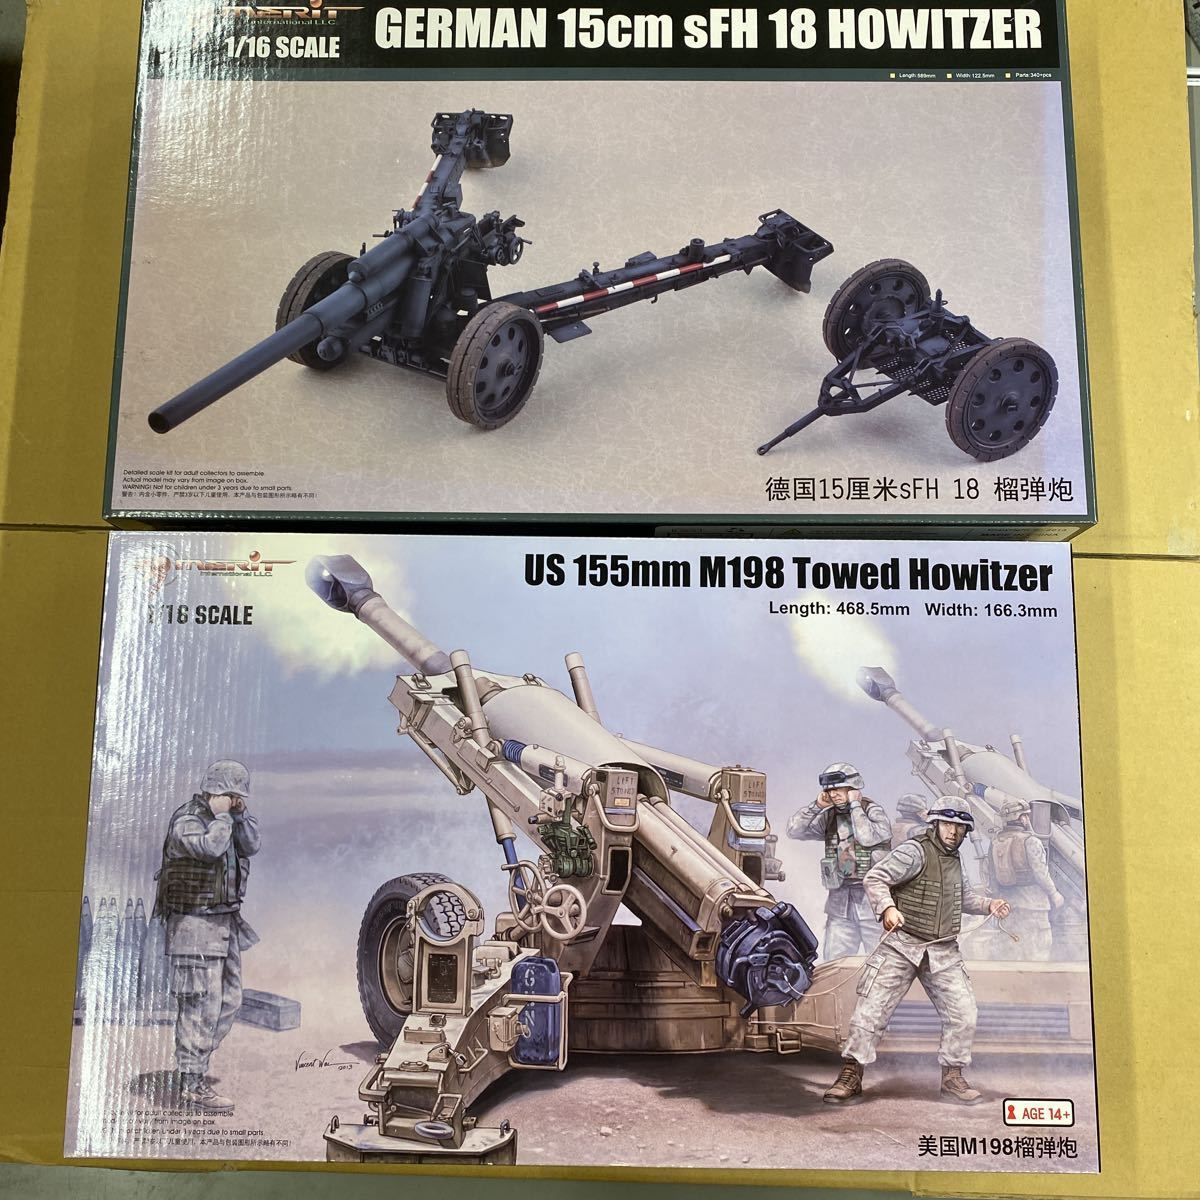 Merit(メリット)1/16「US 155mm M198 Towed Howitzer」「GERMAN 15cm sFH 18 HOWITZER」2種セット